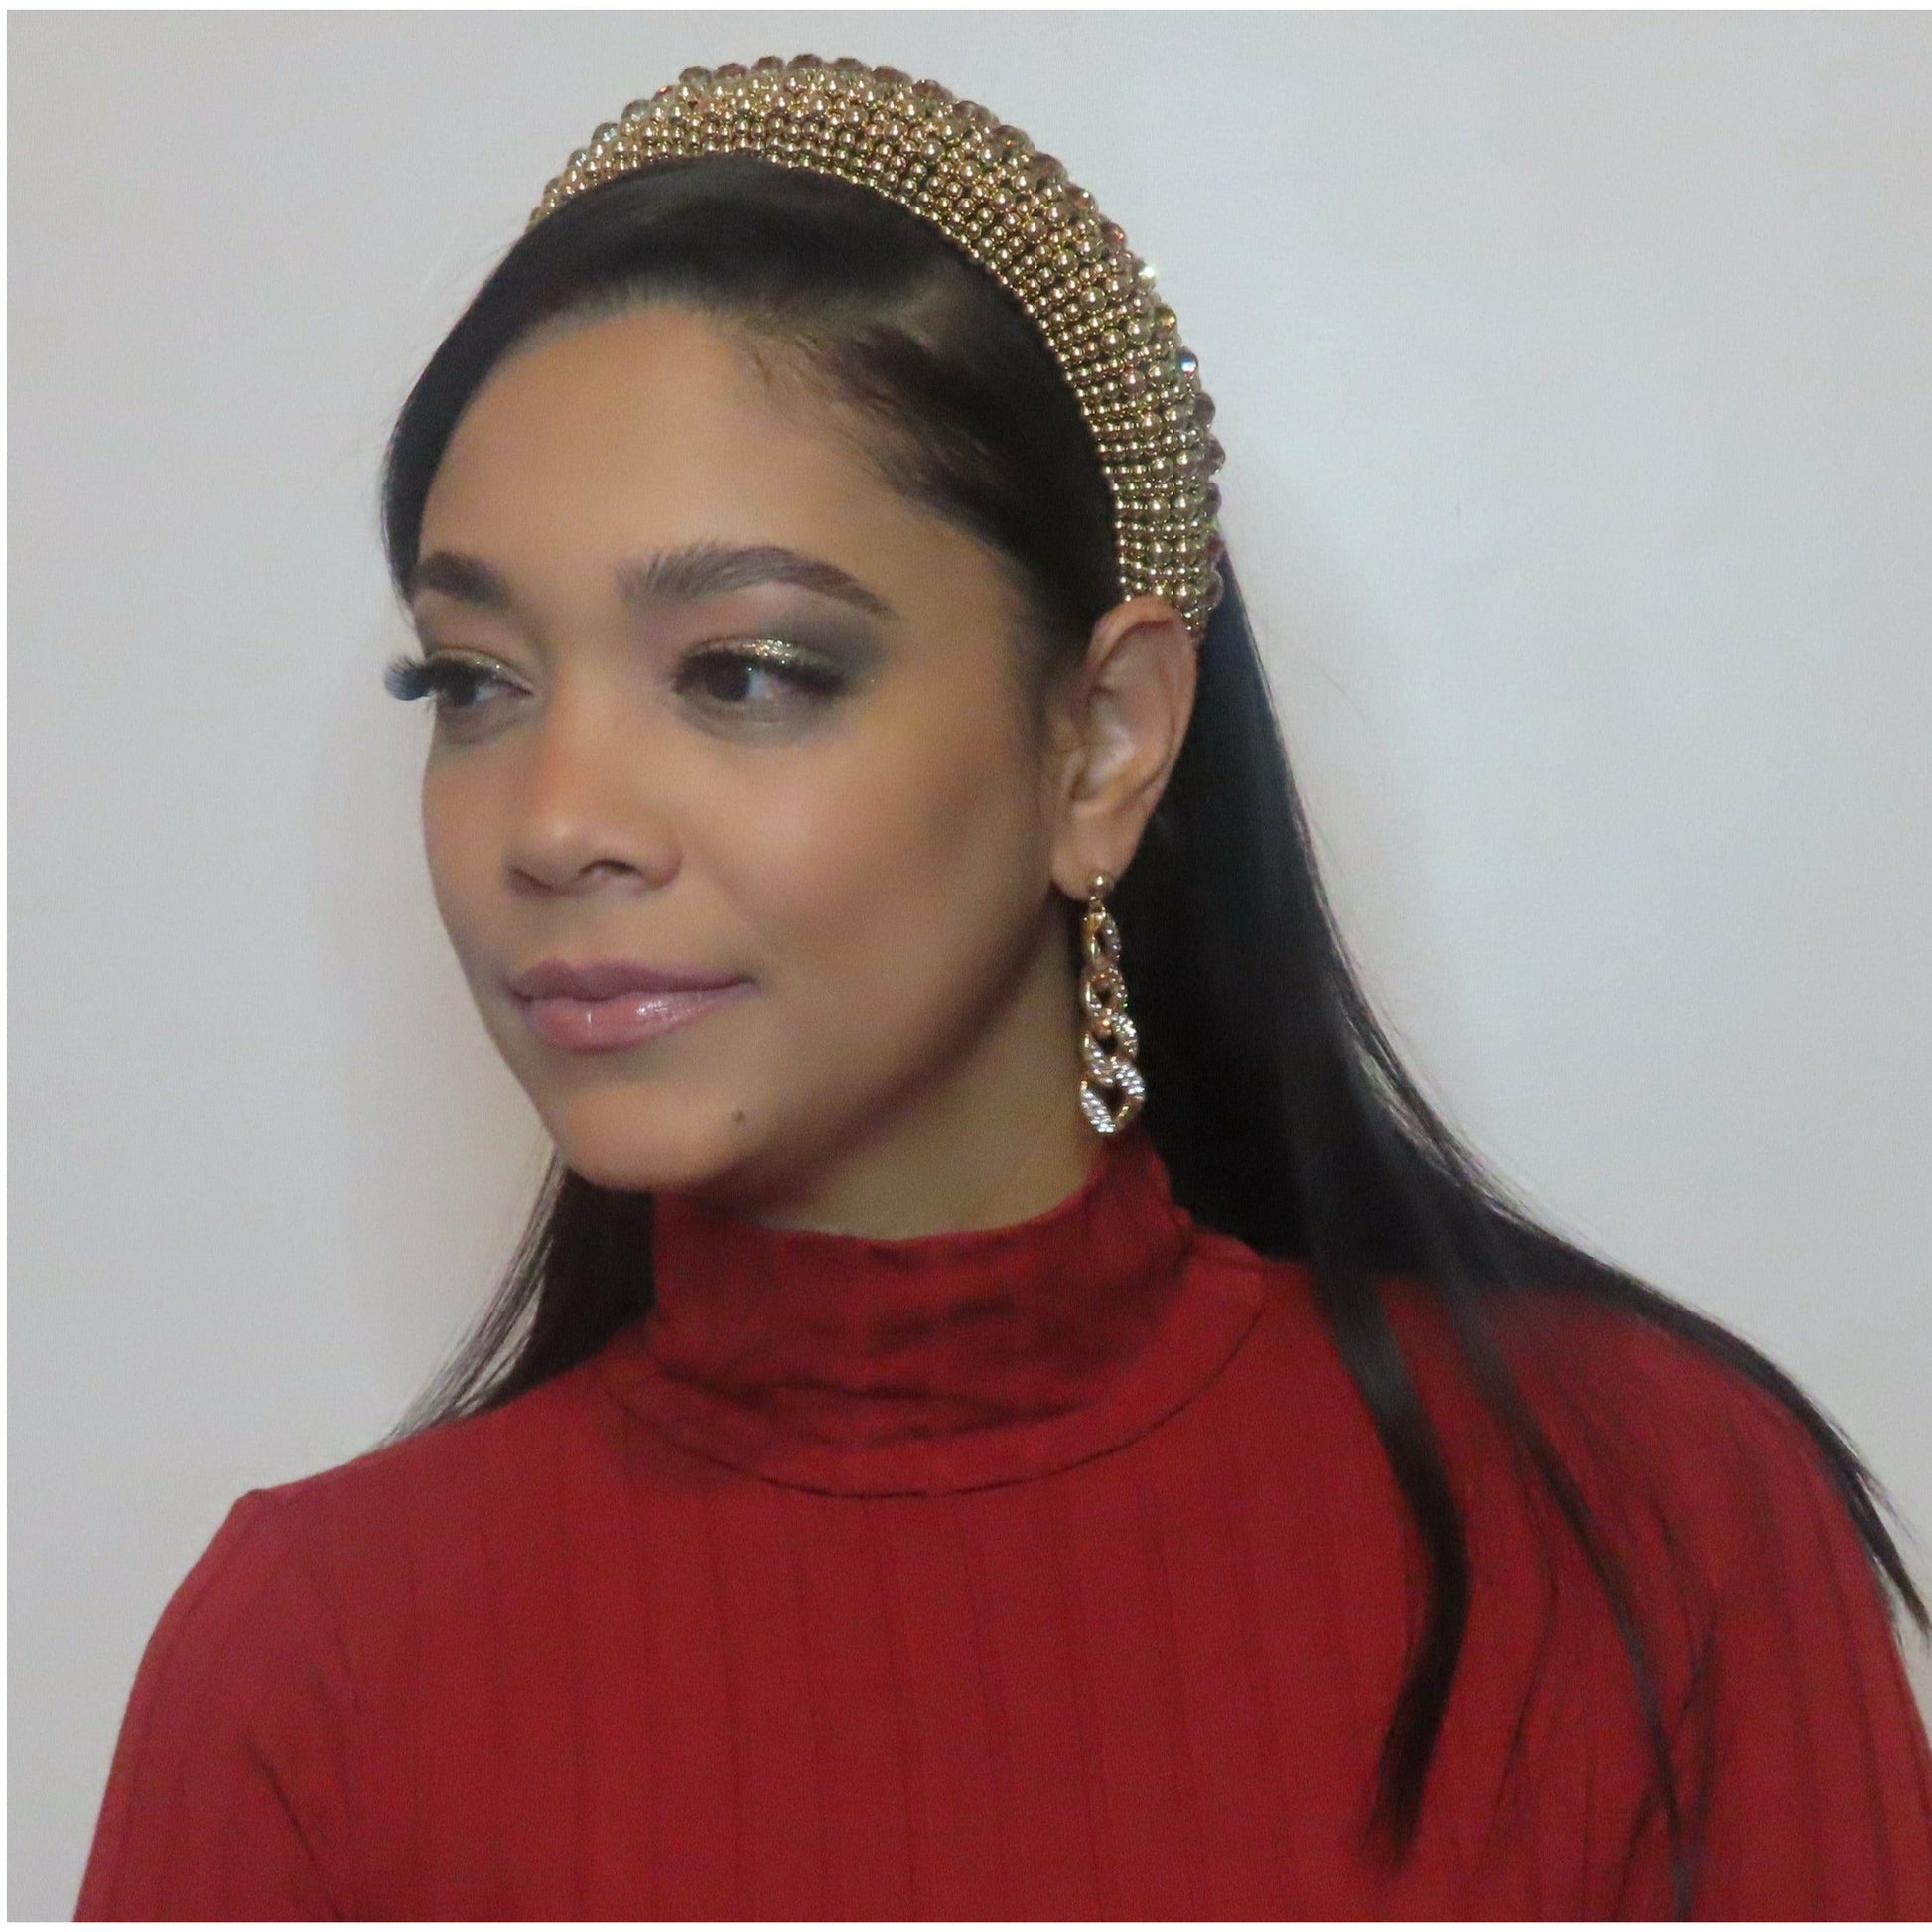 women wearing the rhinestones crown headband in gold color